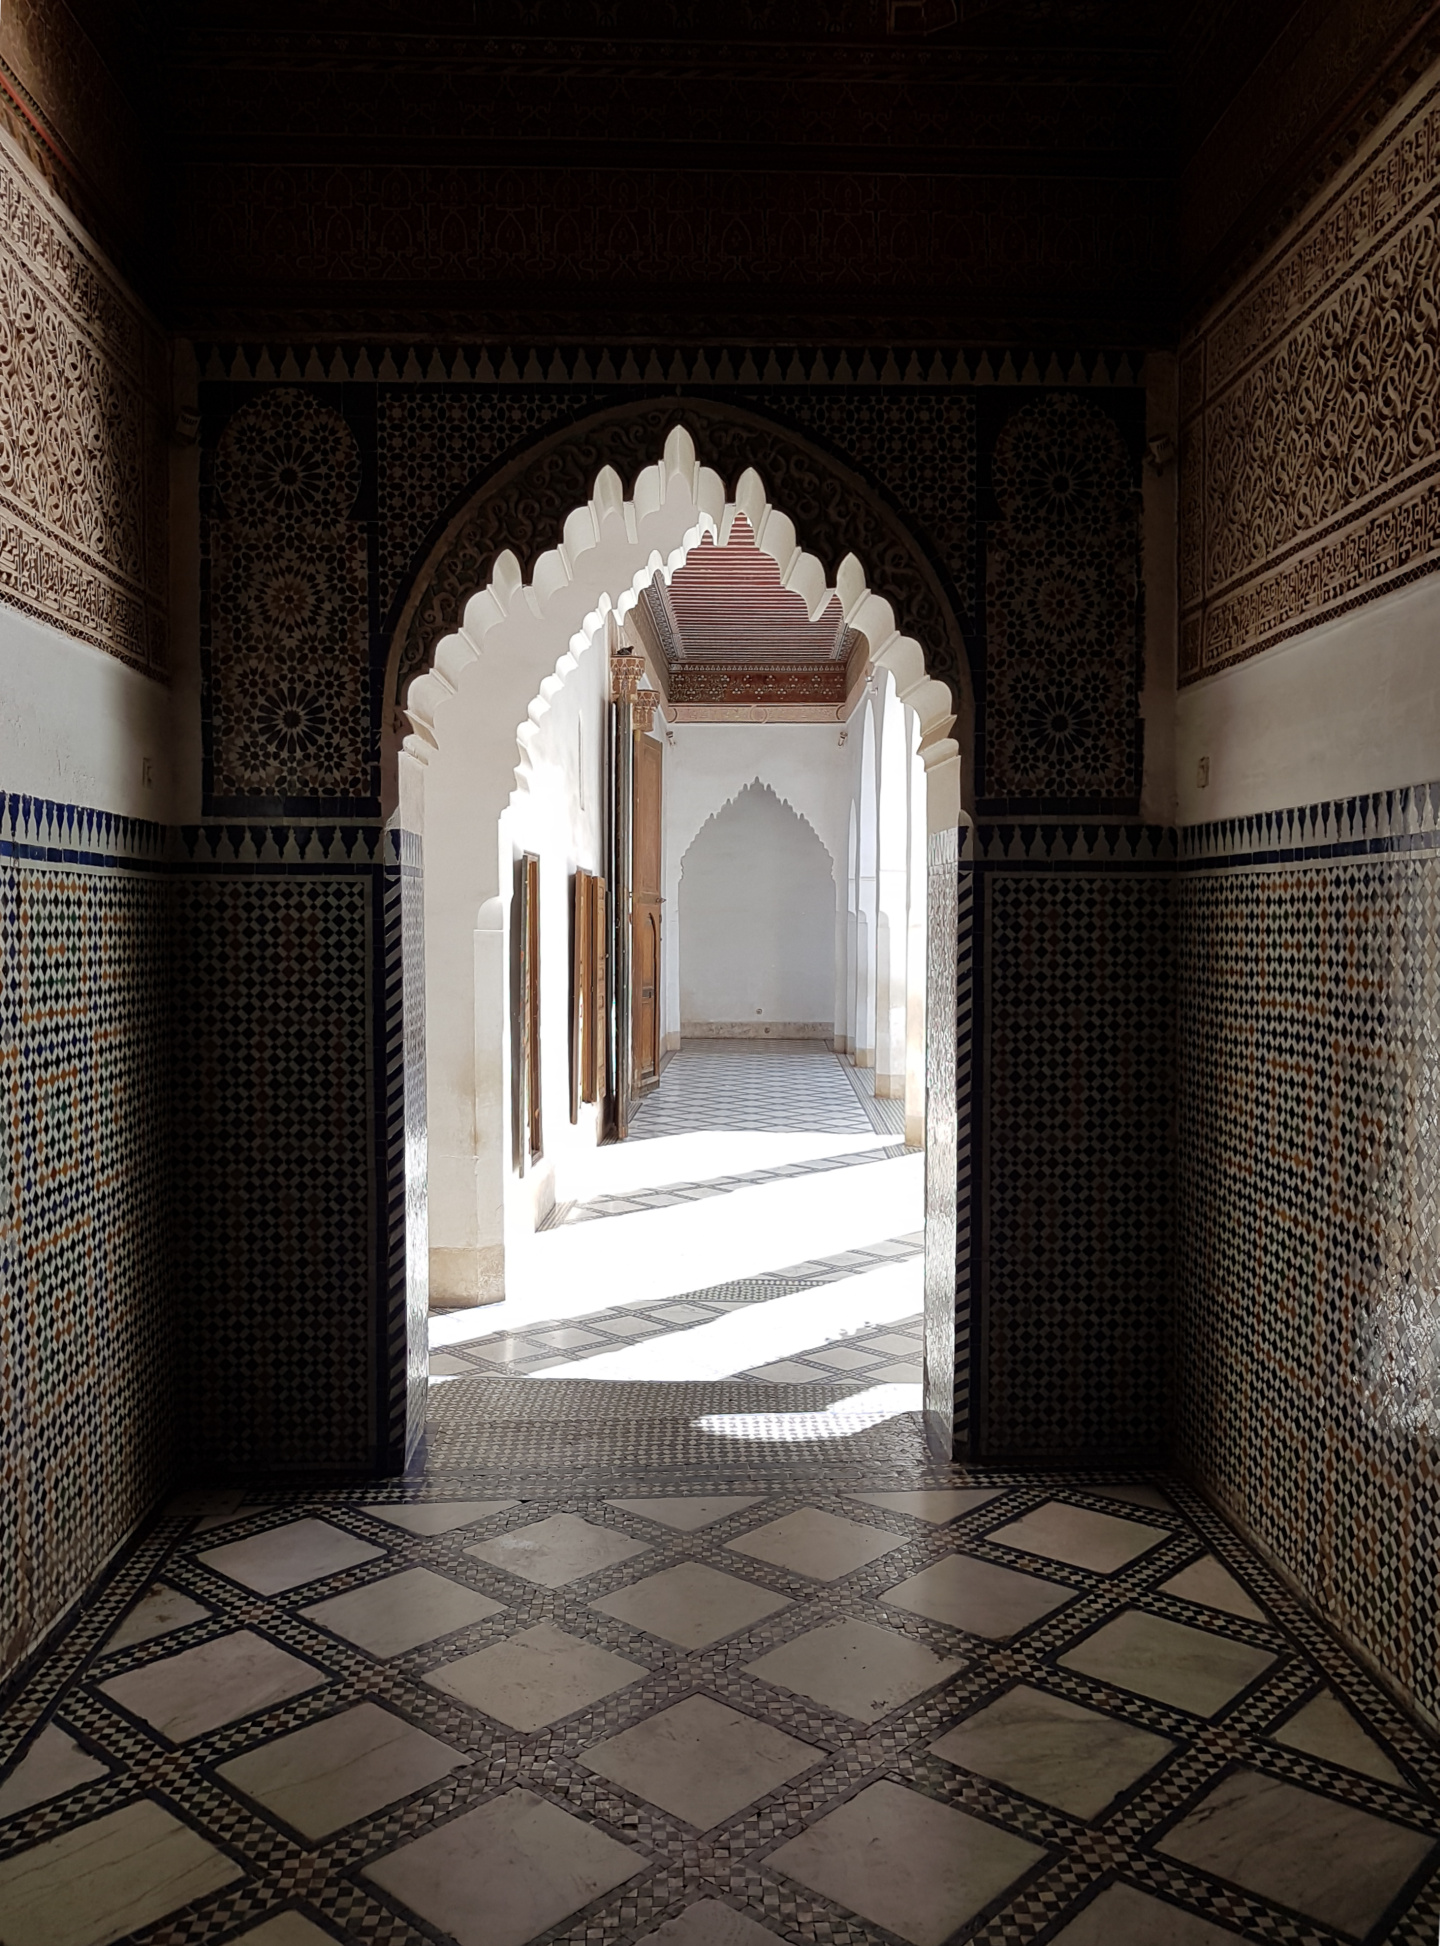 20180314-092916-Bahia_Palace-Marrakech-SJ-2-r.jpg